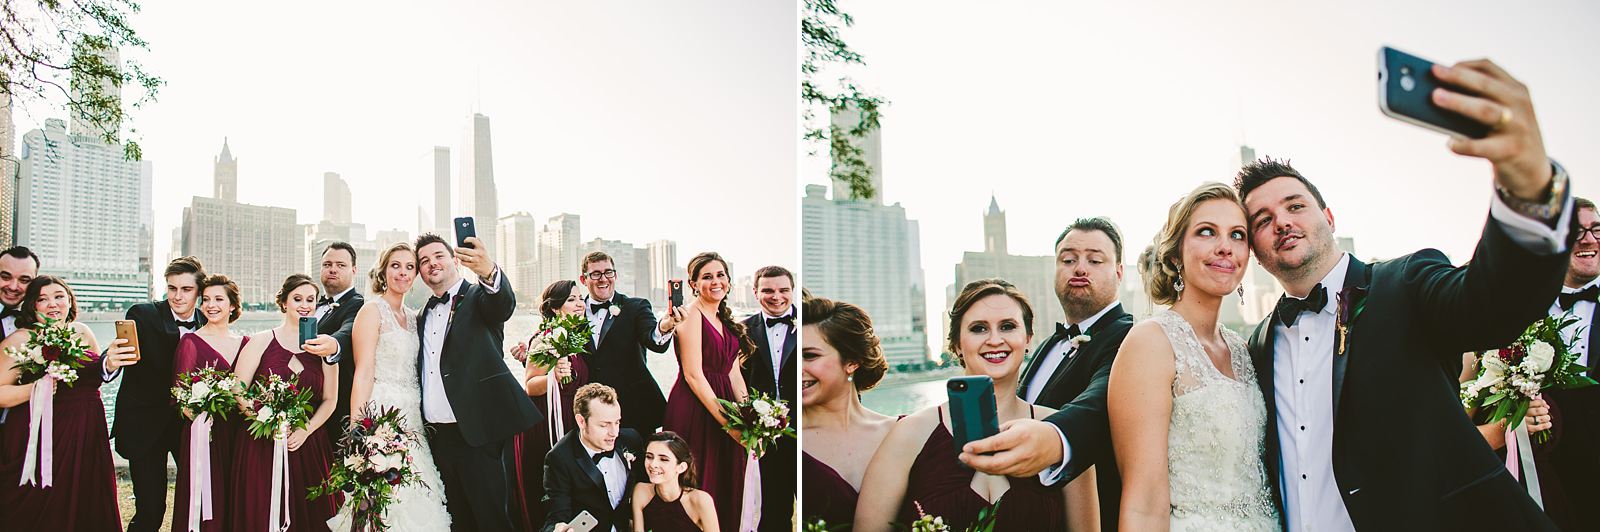 42 best bridal party photos - Chicago Drake Hotel Wedding // Corie + Jordan